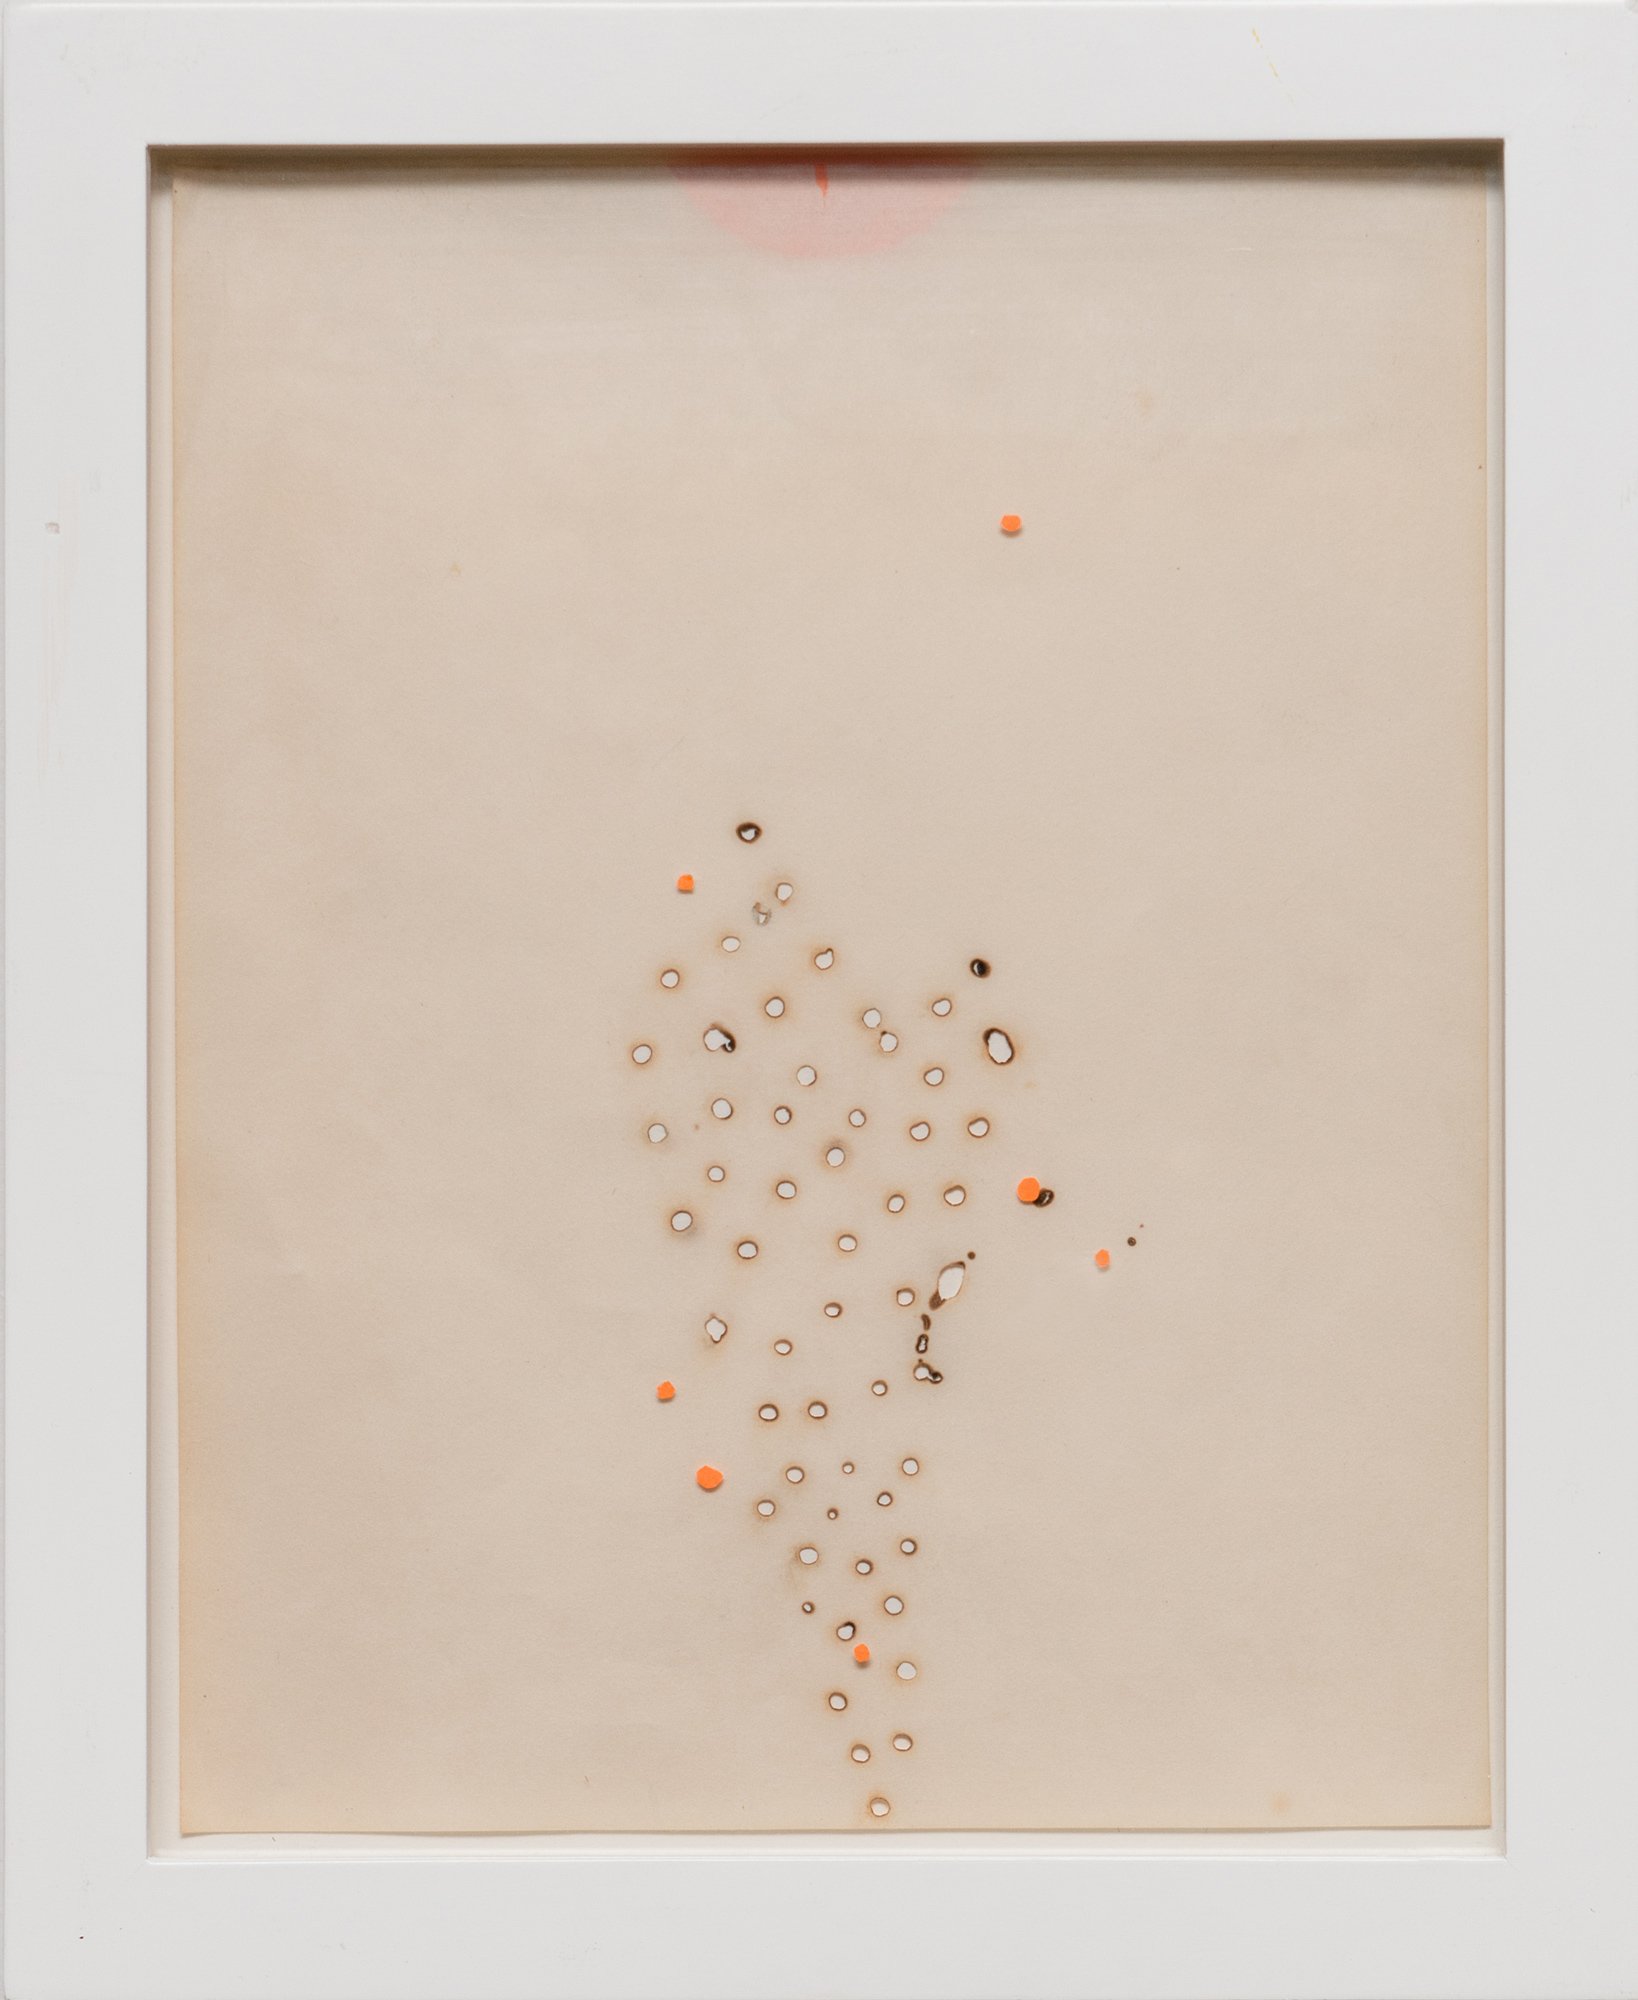    Orange Holes   2013, paper, glass 8” x 10” 